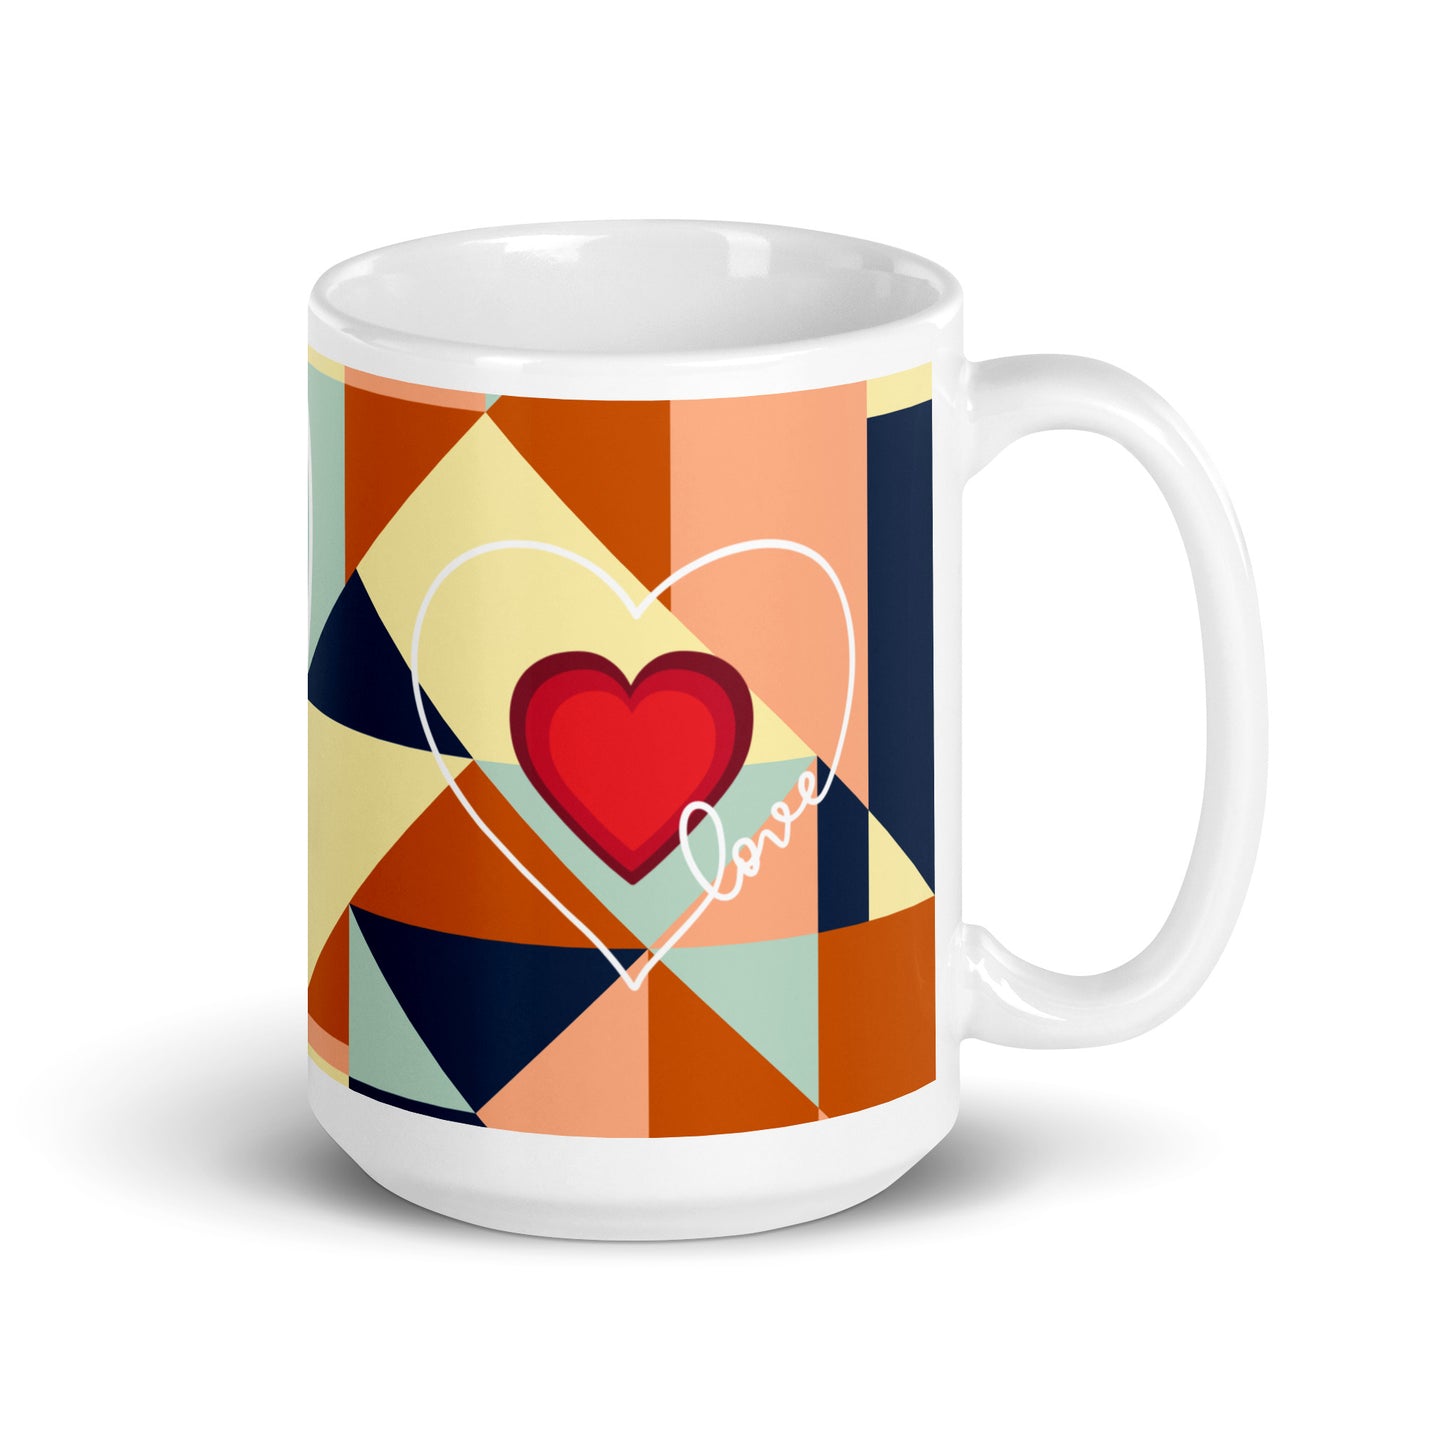 Heart & Love Mug